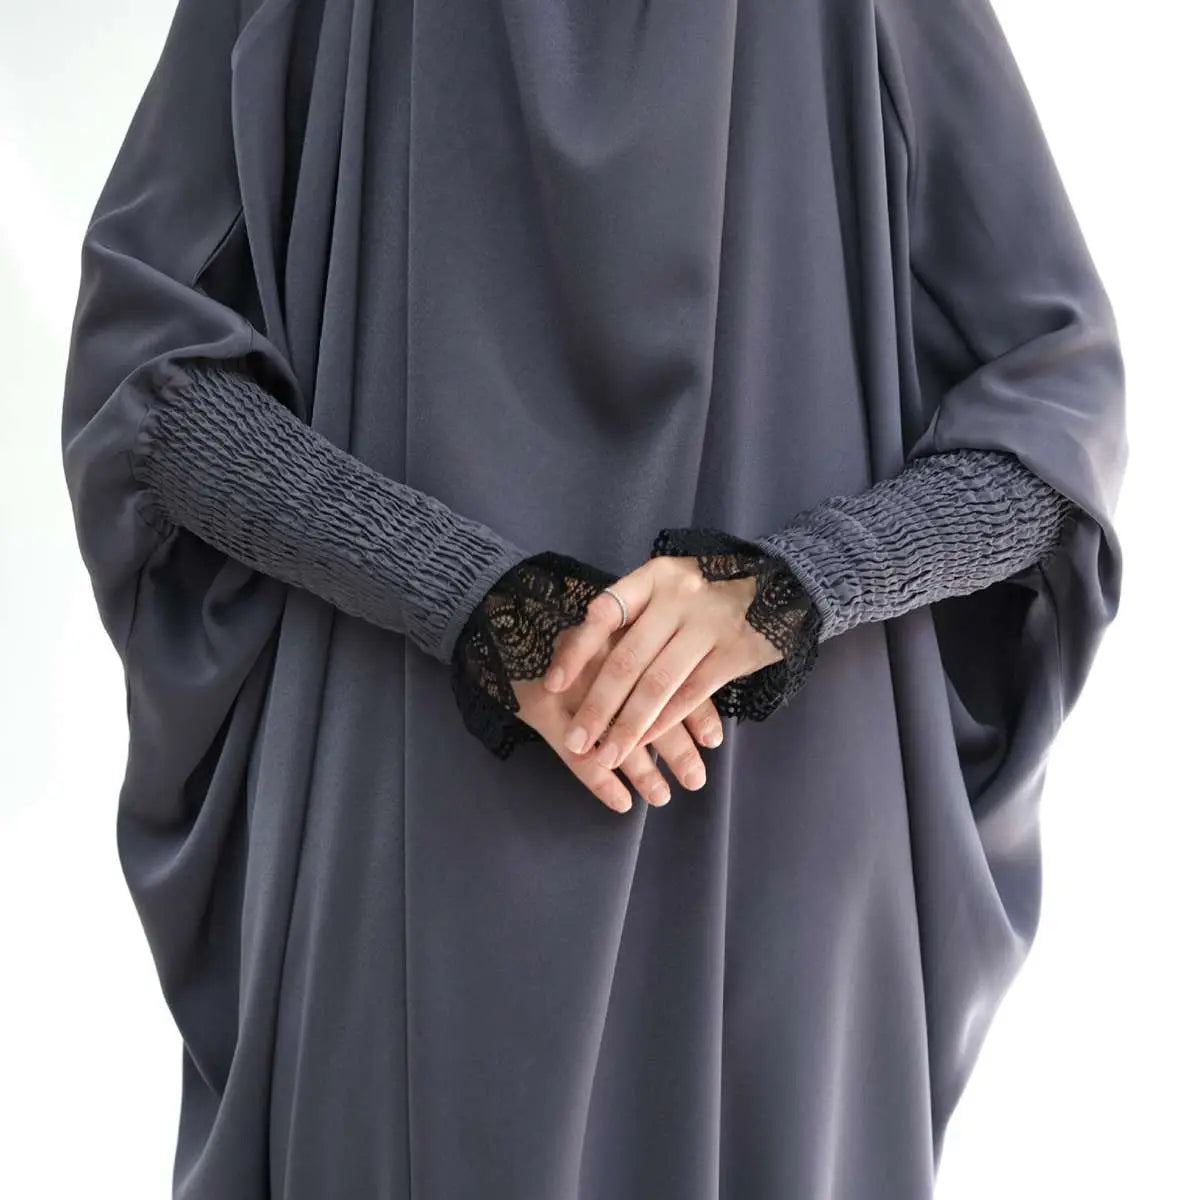 Satin Lace Cuffs Muslim Women Overhead Jilbab Abaya Prayer Dress